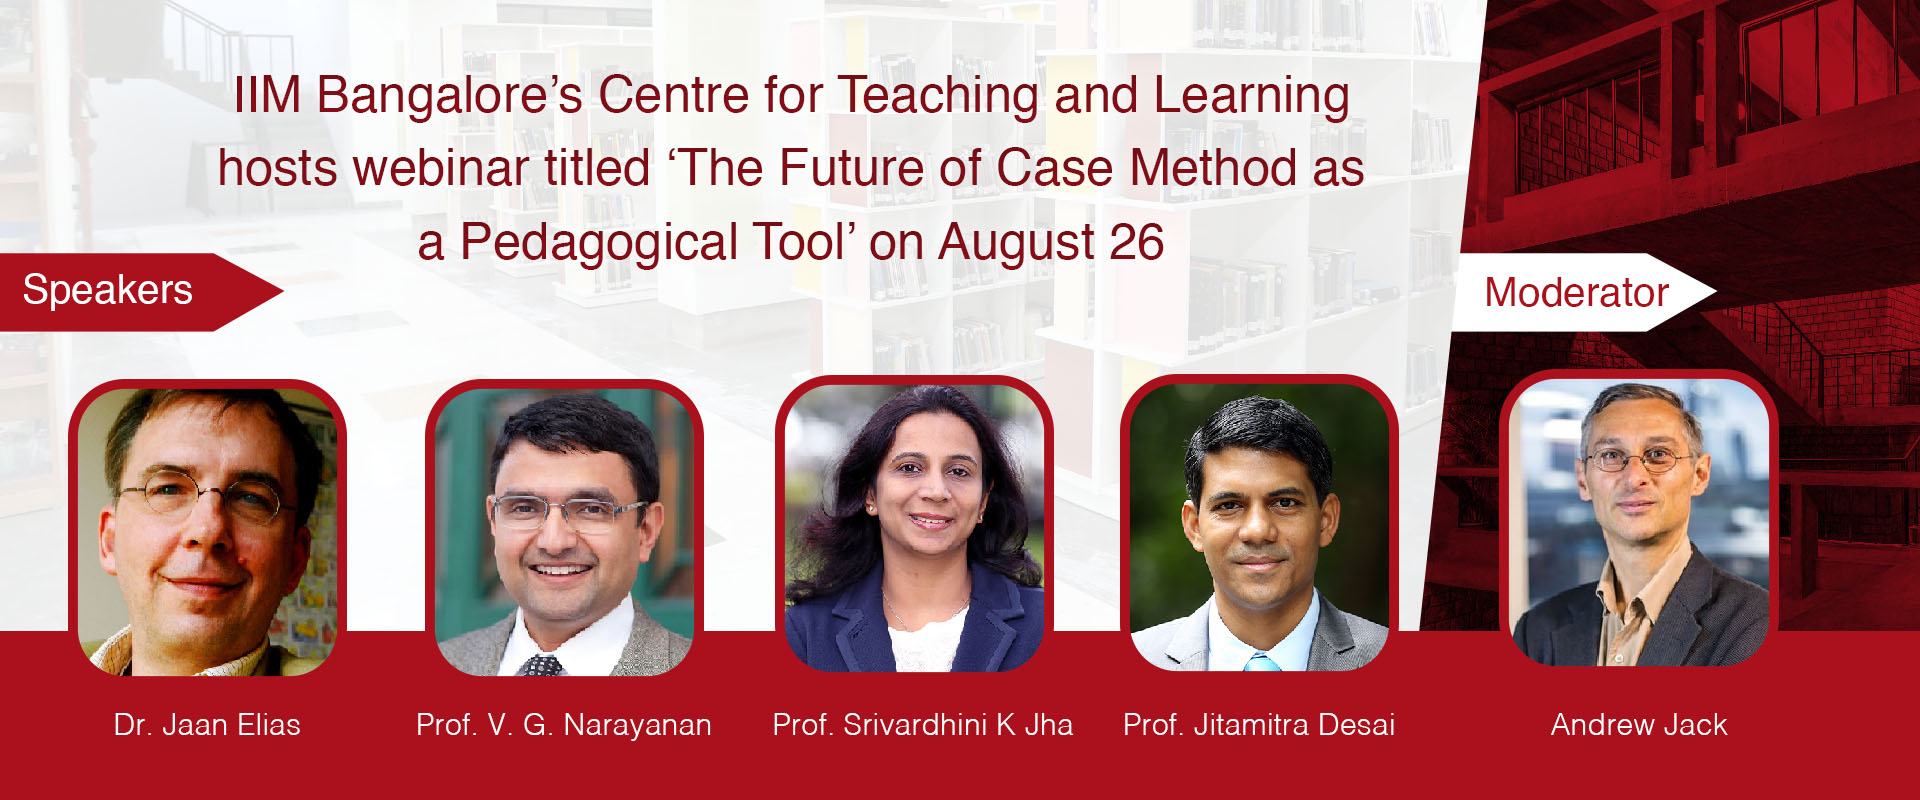 The Future of Case Method as a Pedagogical Tool